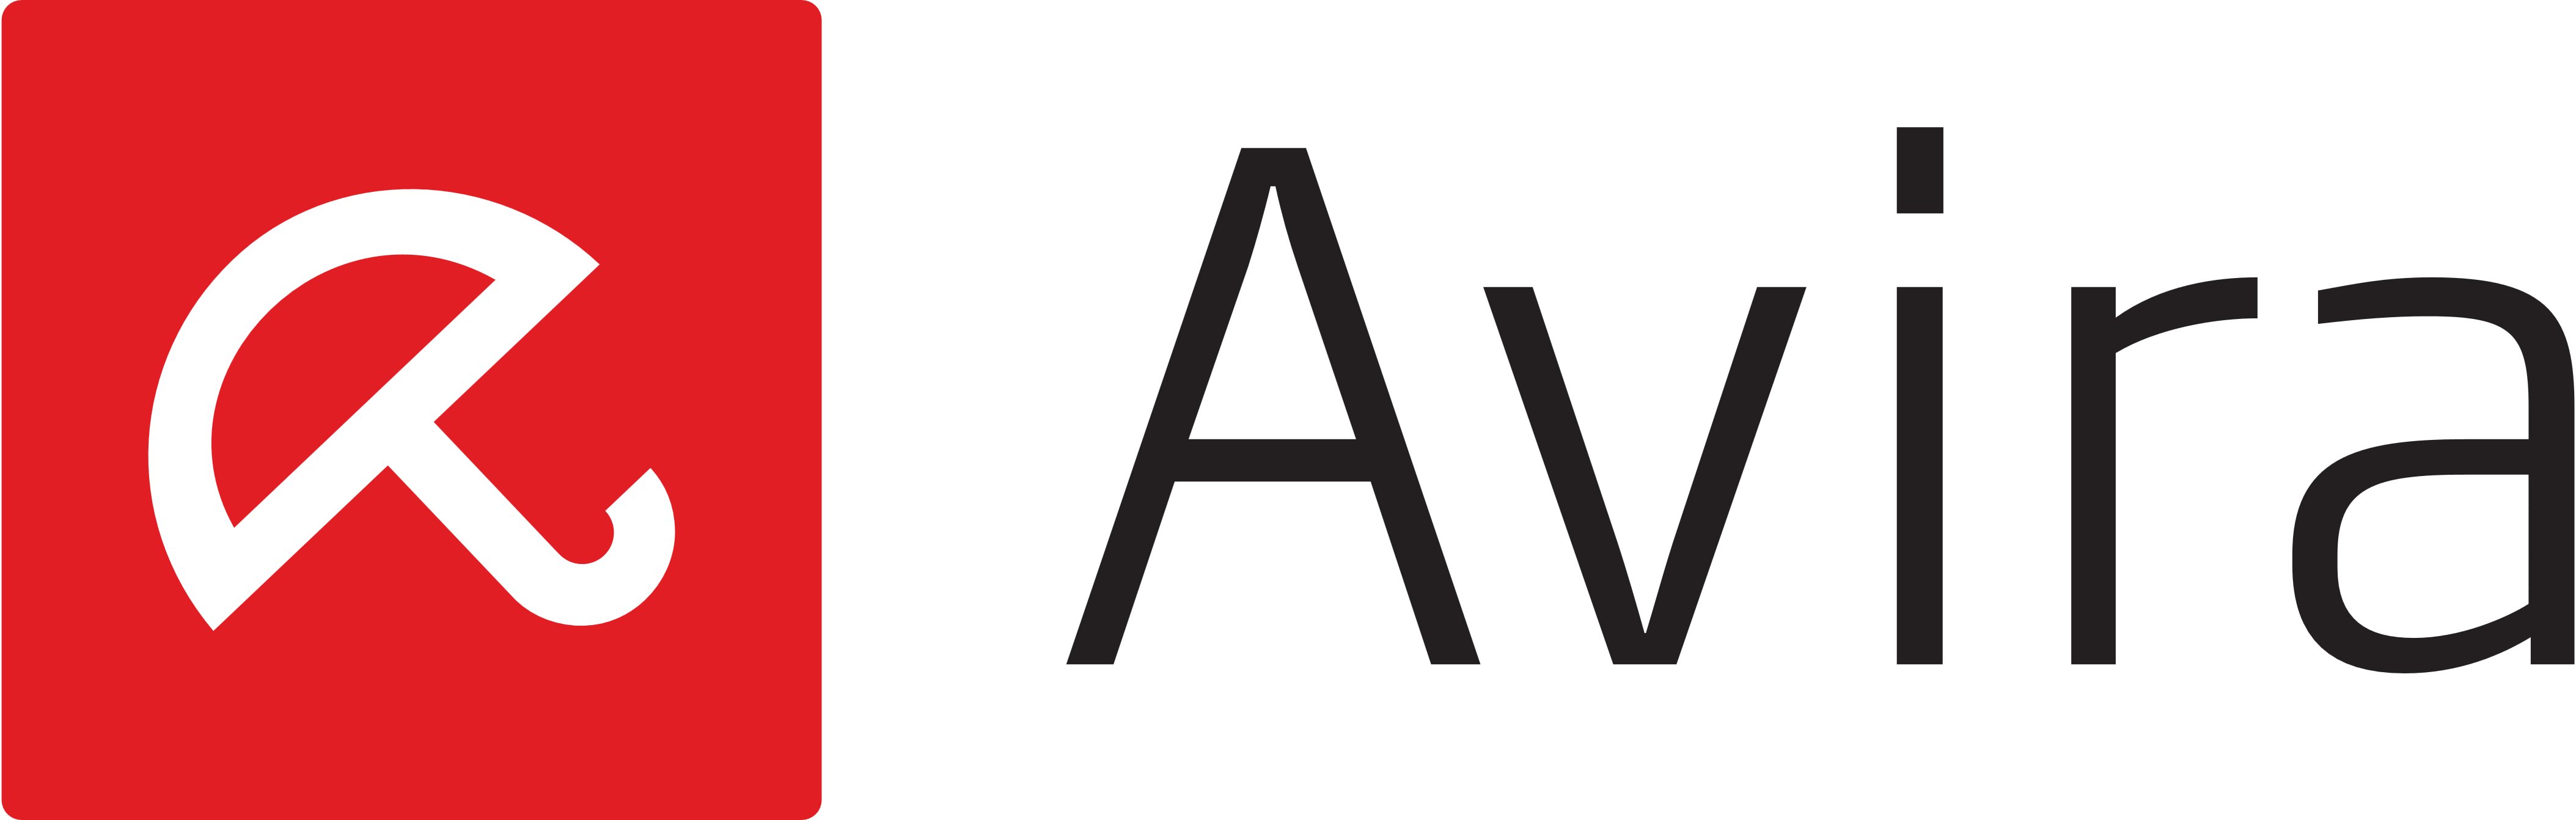 Avira logo, logotype